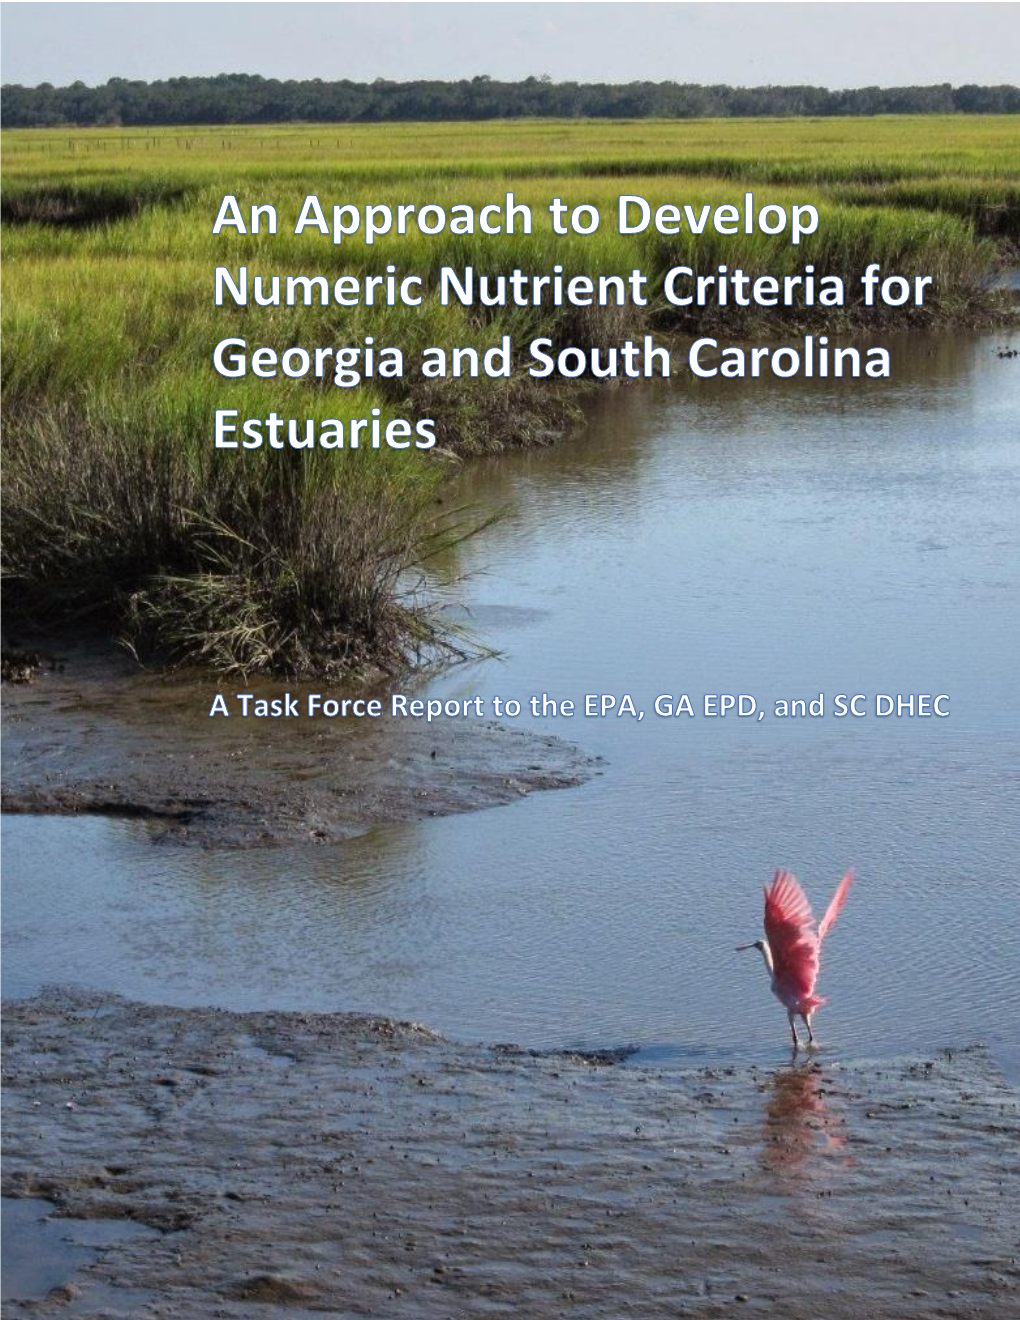 An Approach to Develop Numeric Nutrient Criteria for Georgia and South Carolina Estuaries